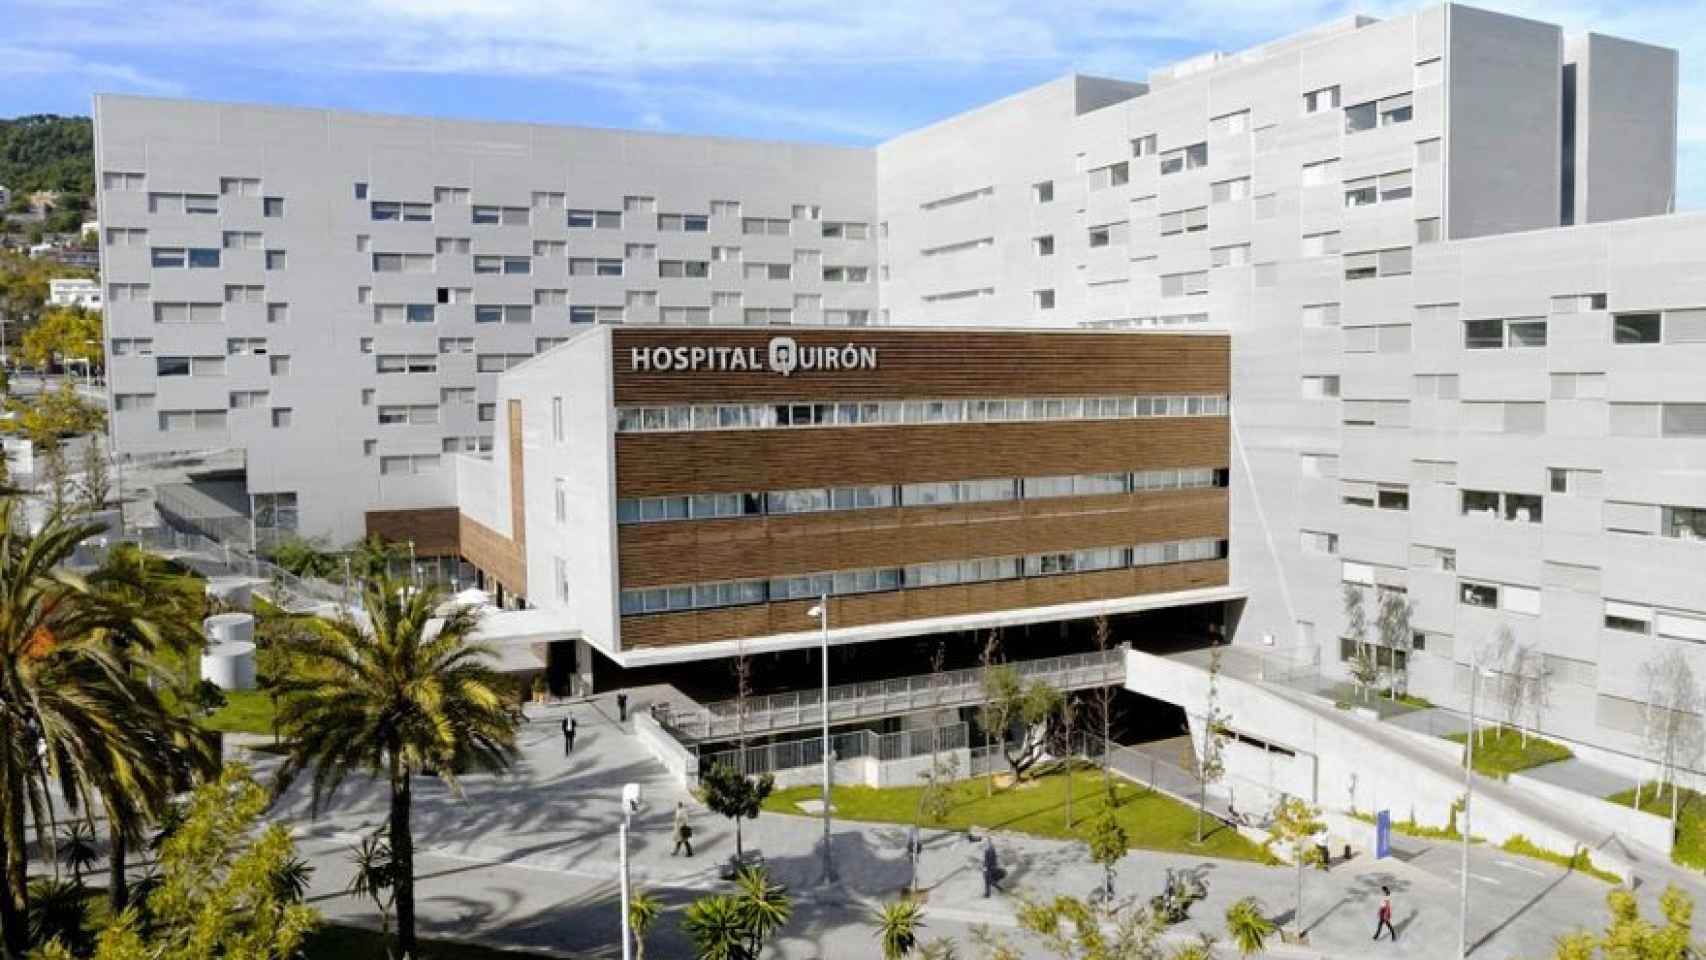 Hospital Quirón Barcelona / QUIRON SALUD